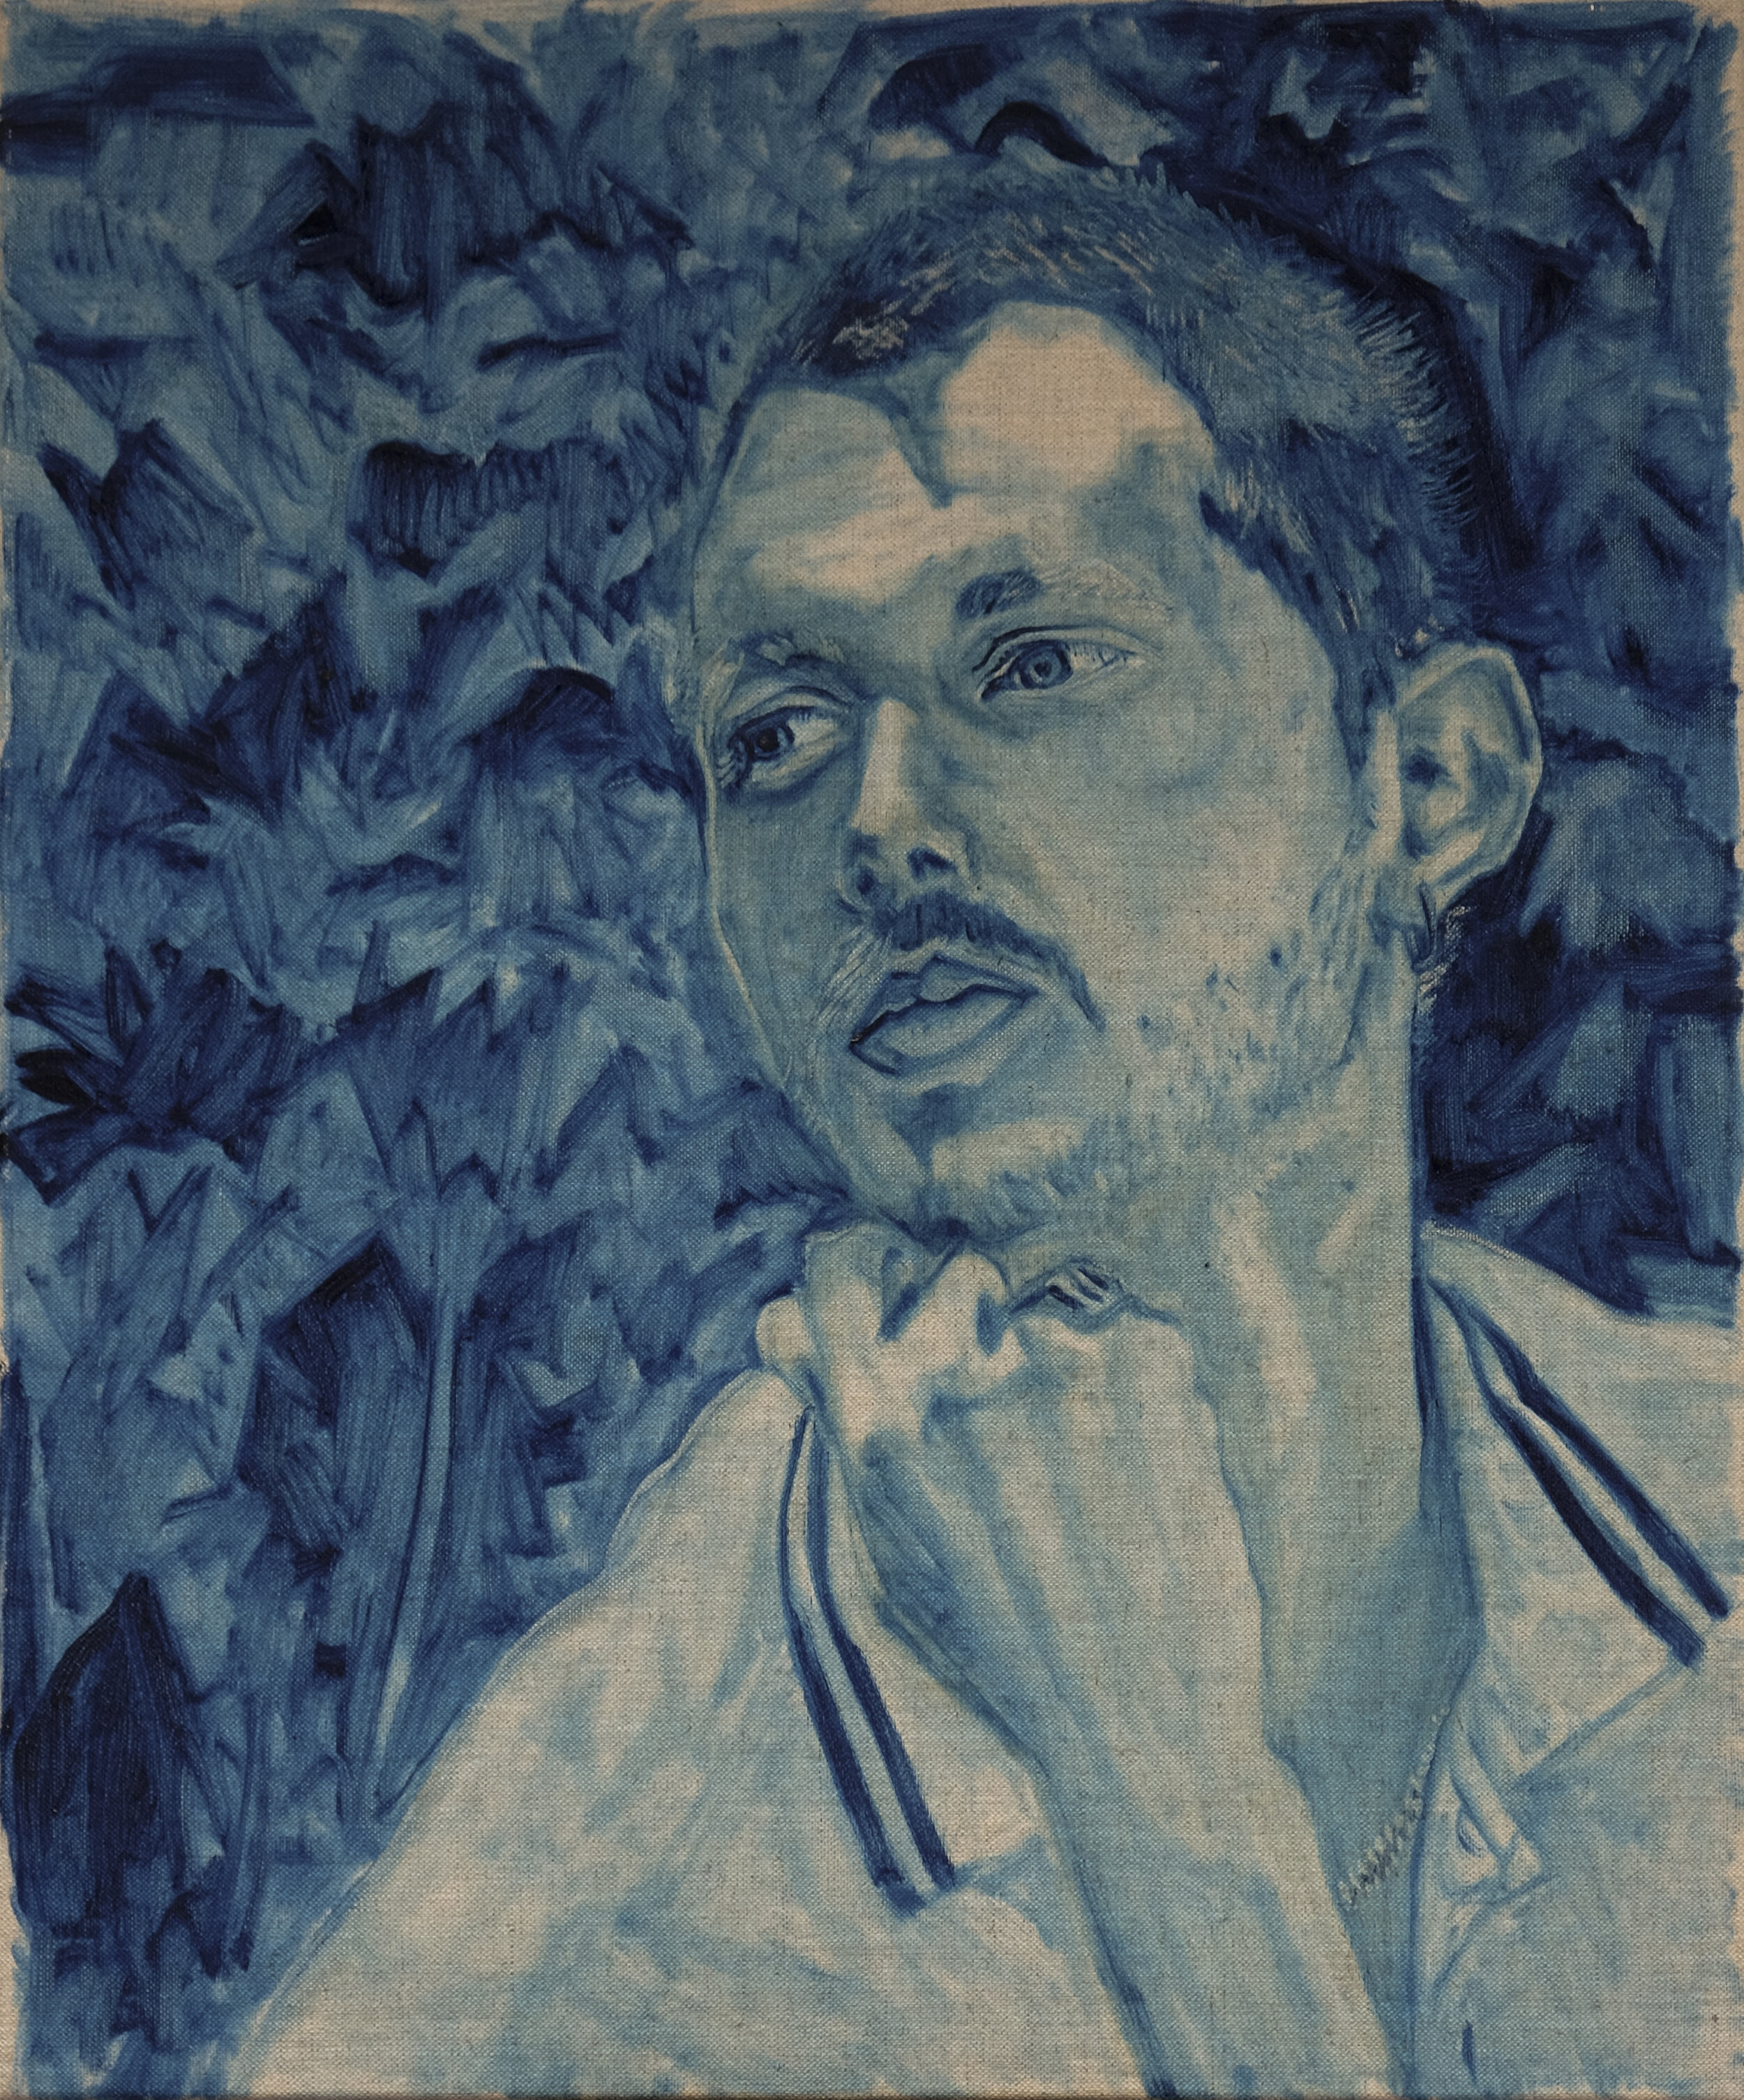   Thinking in Blue (Self Portrait)   2020  Oil on linen  50cm x 60cm 